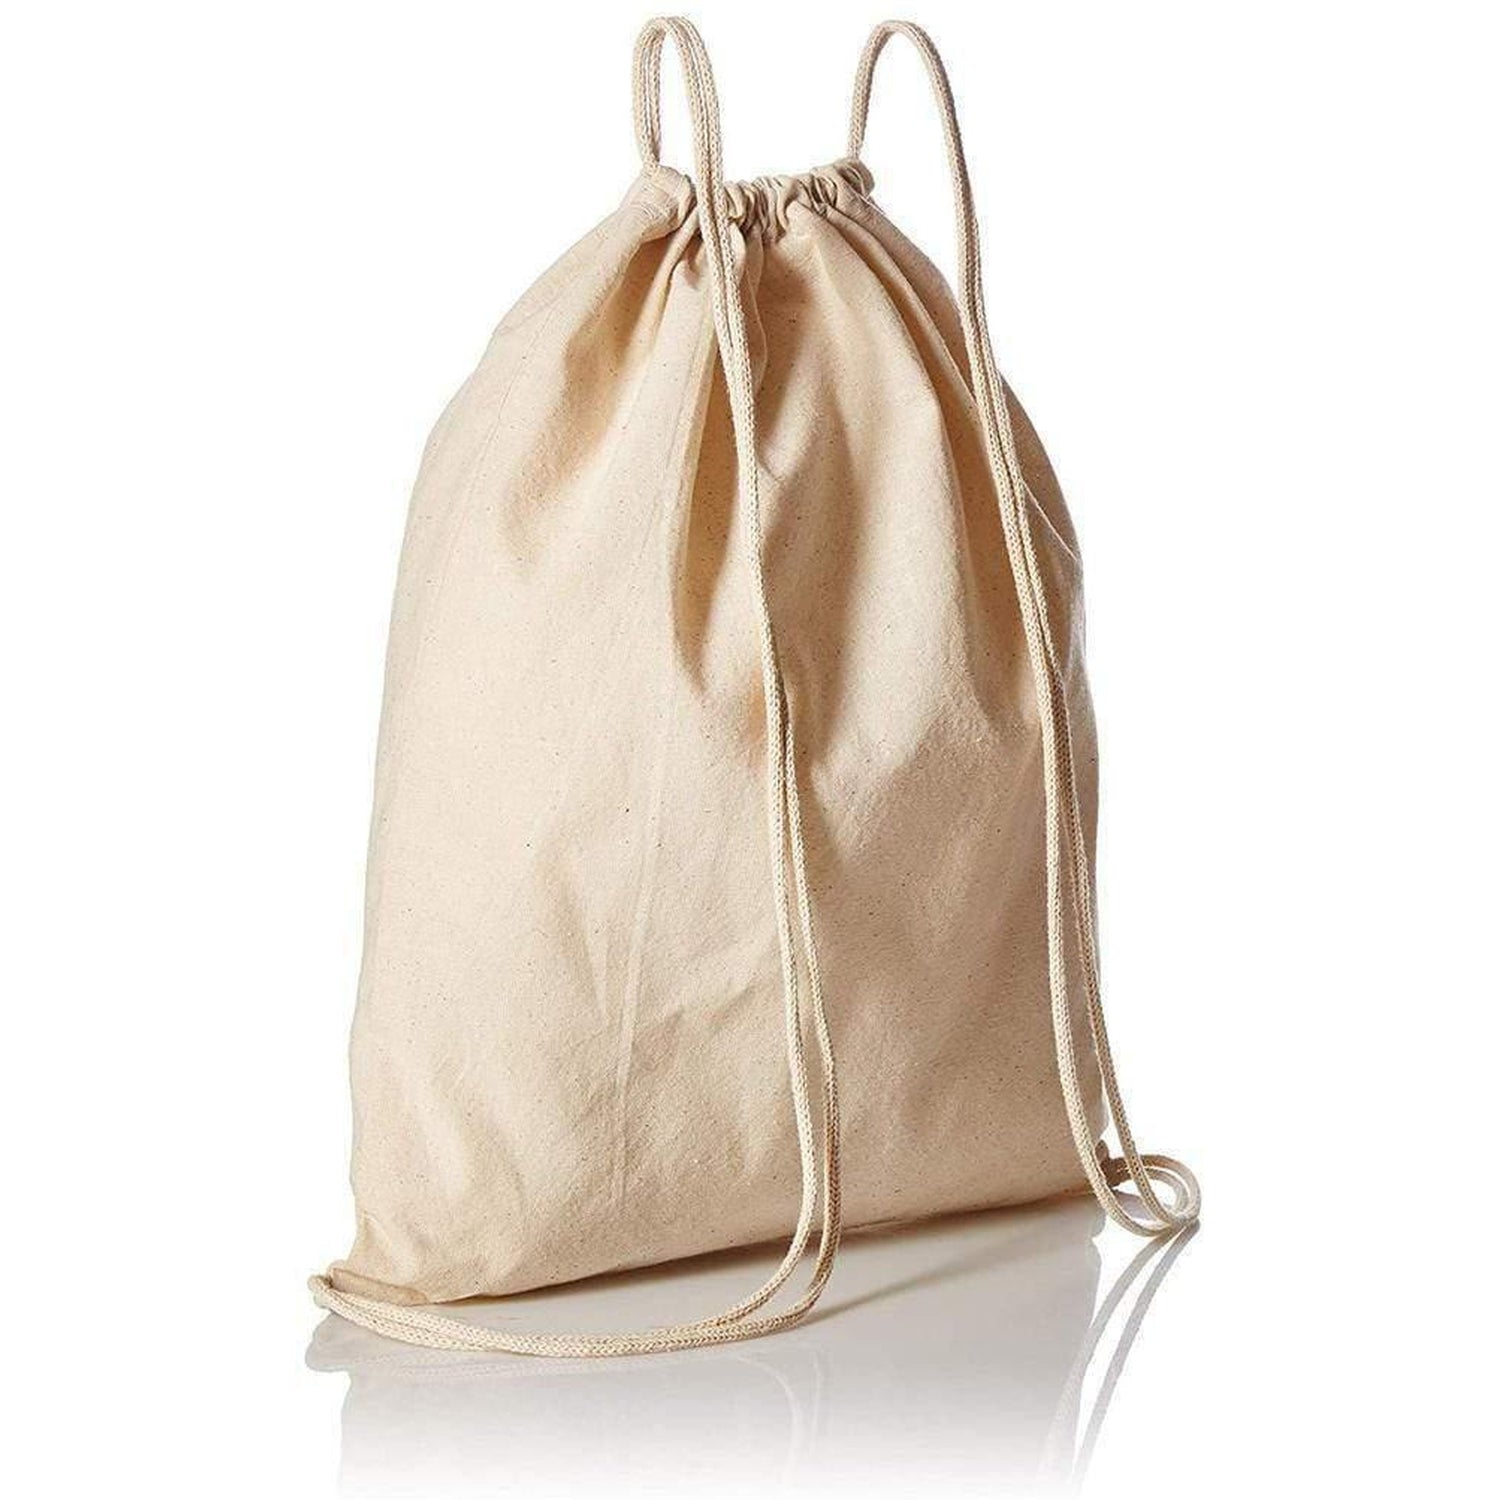 Organic Cotton Canvas Drawstring Bags in Bulk - OR18 – BagzDepot™